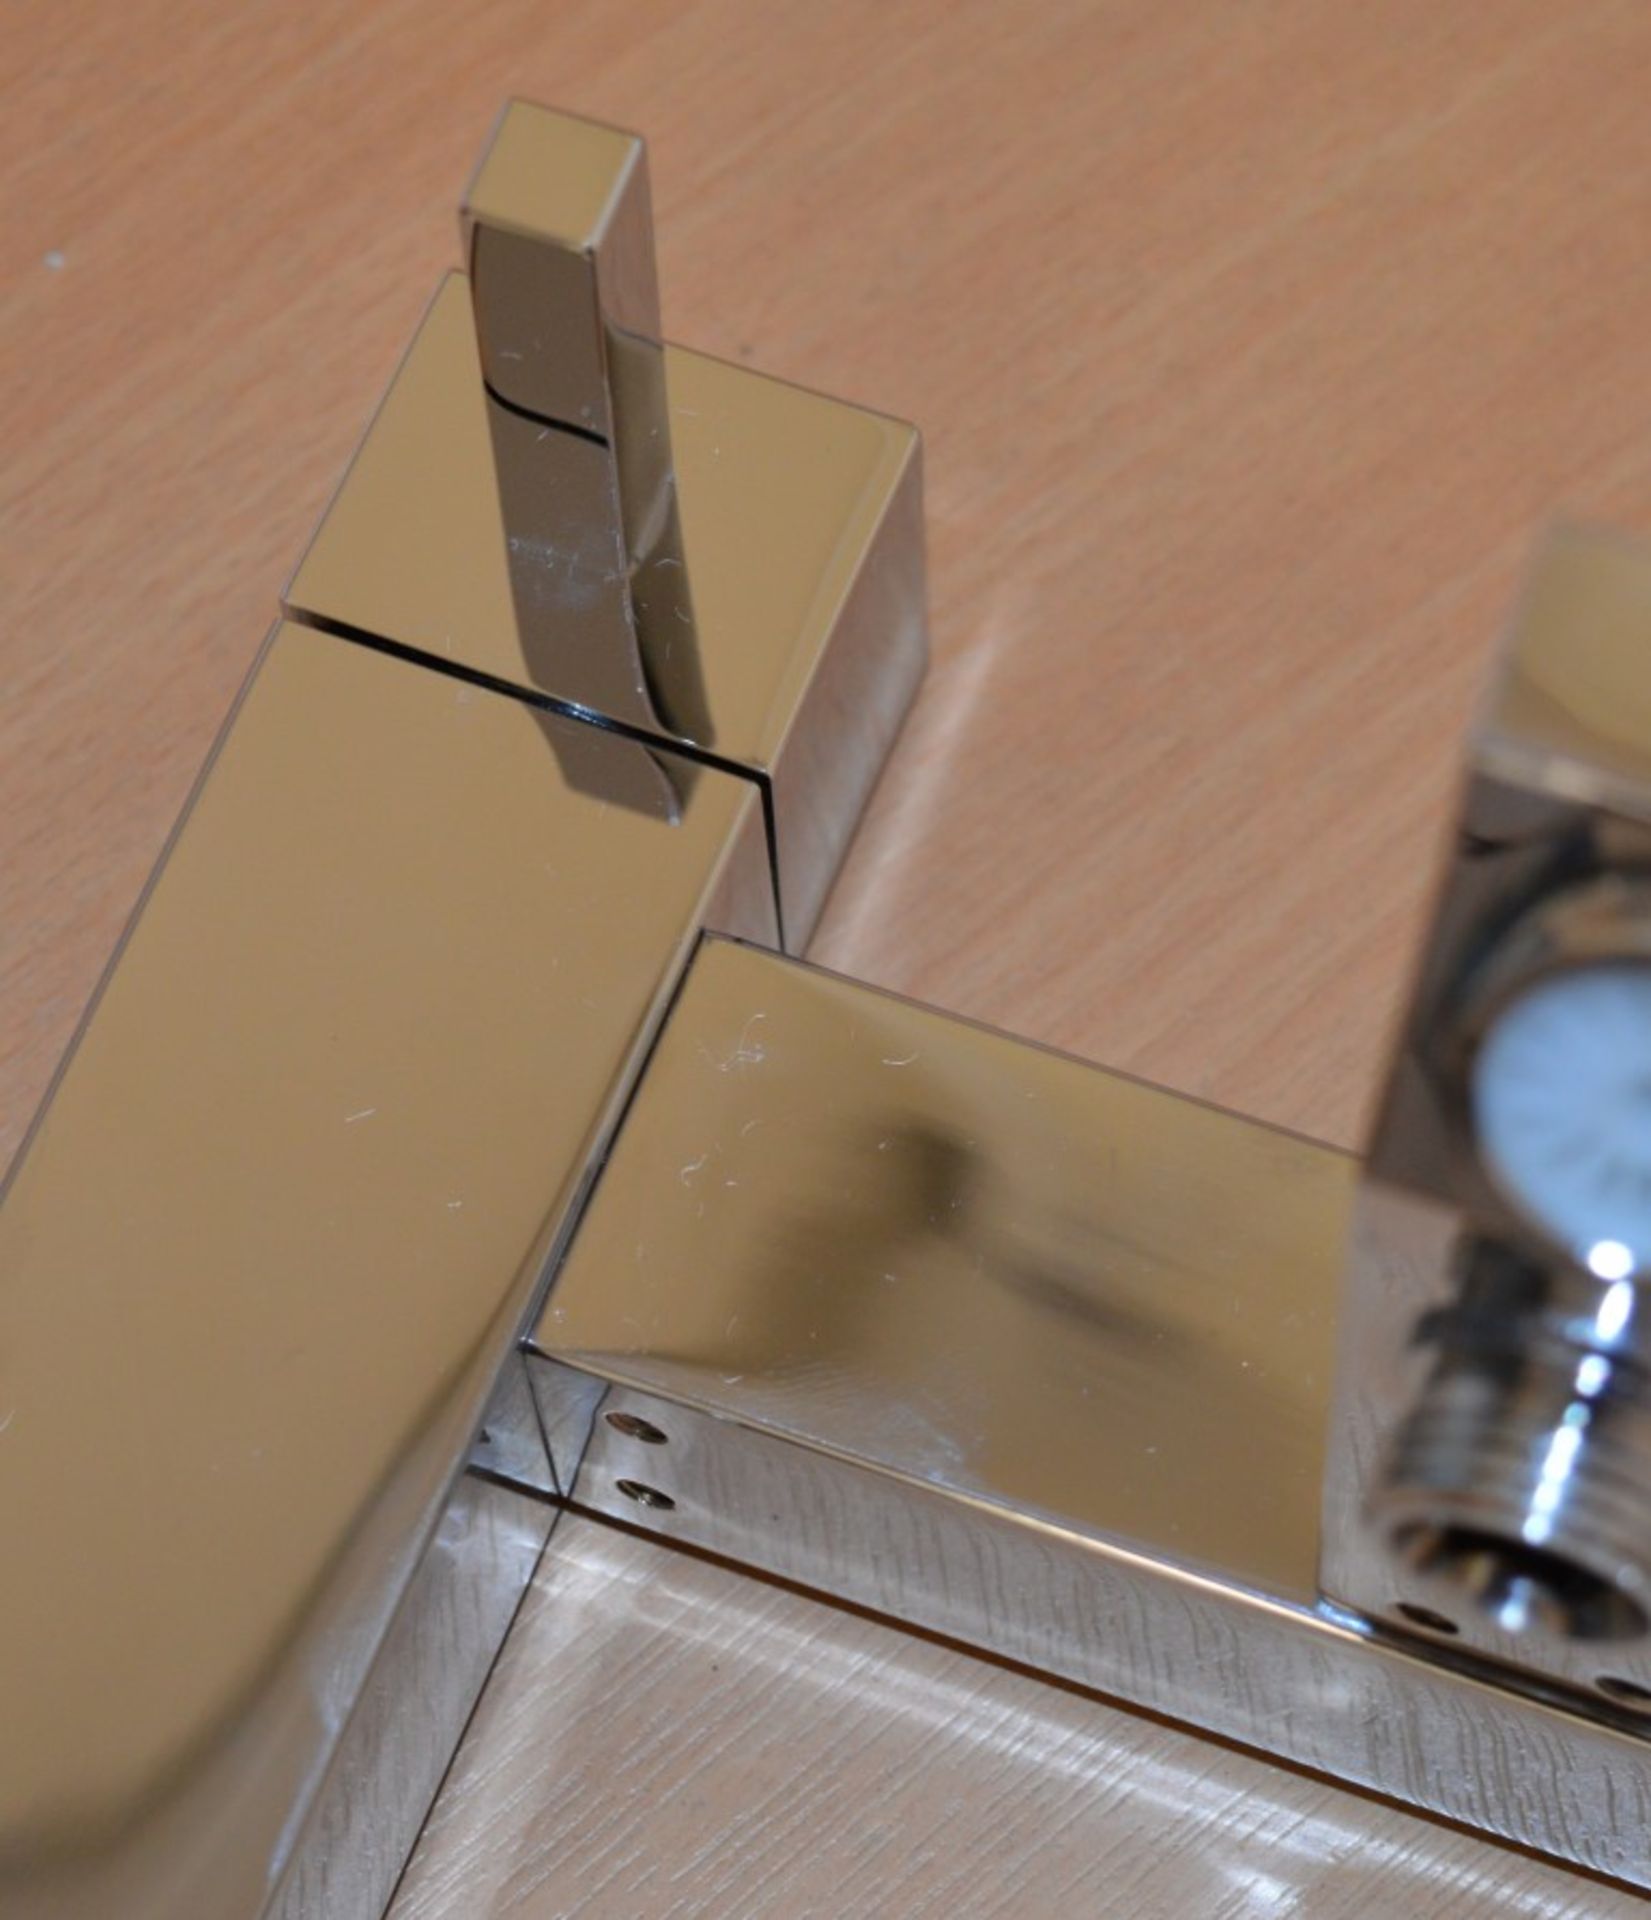 1 x Verona Deck Bath Shower Mixer Tap - Vogue Bathrooms - Modern Bath Mixer Tap in Bright Chrome - Image 4 of 17